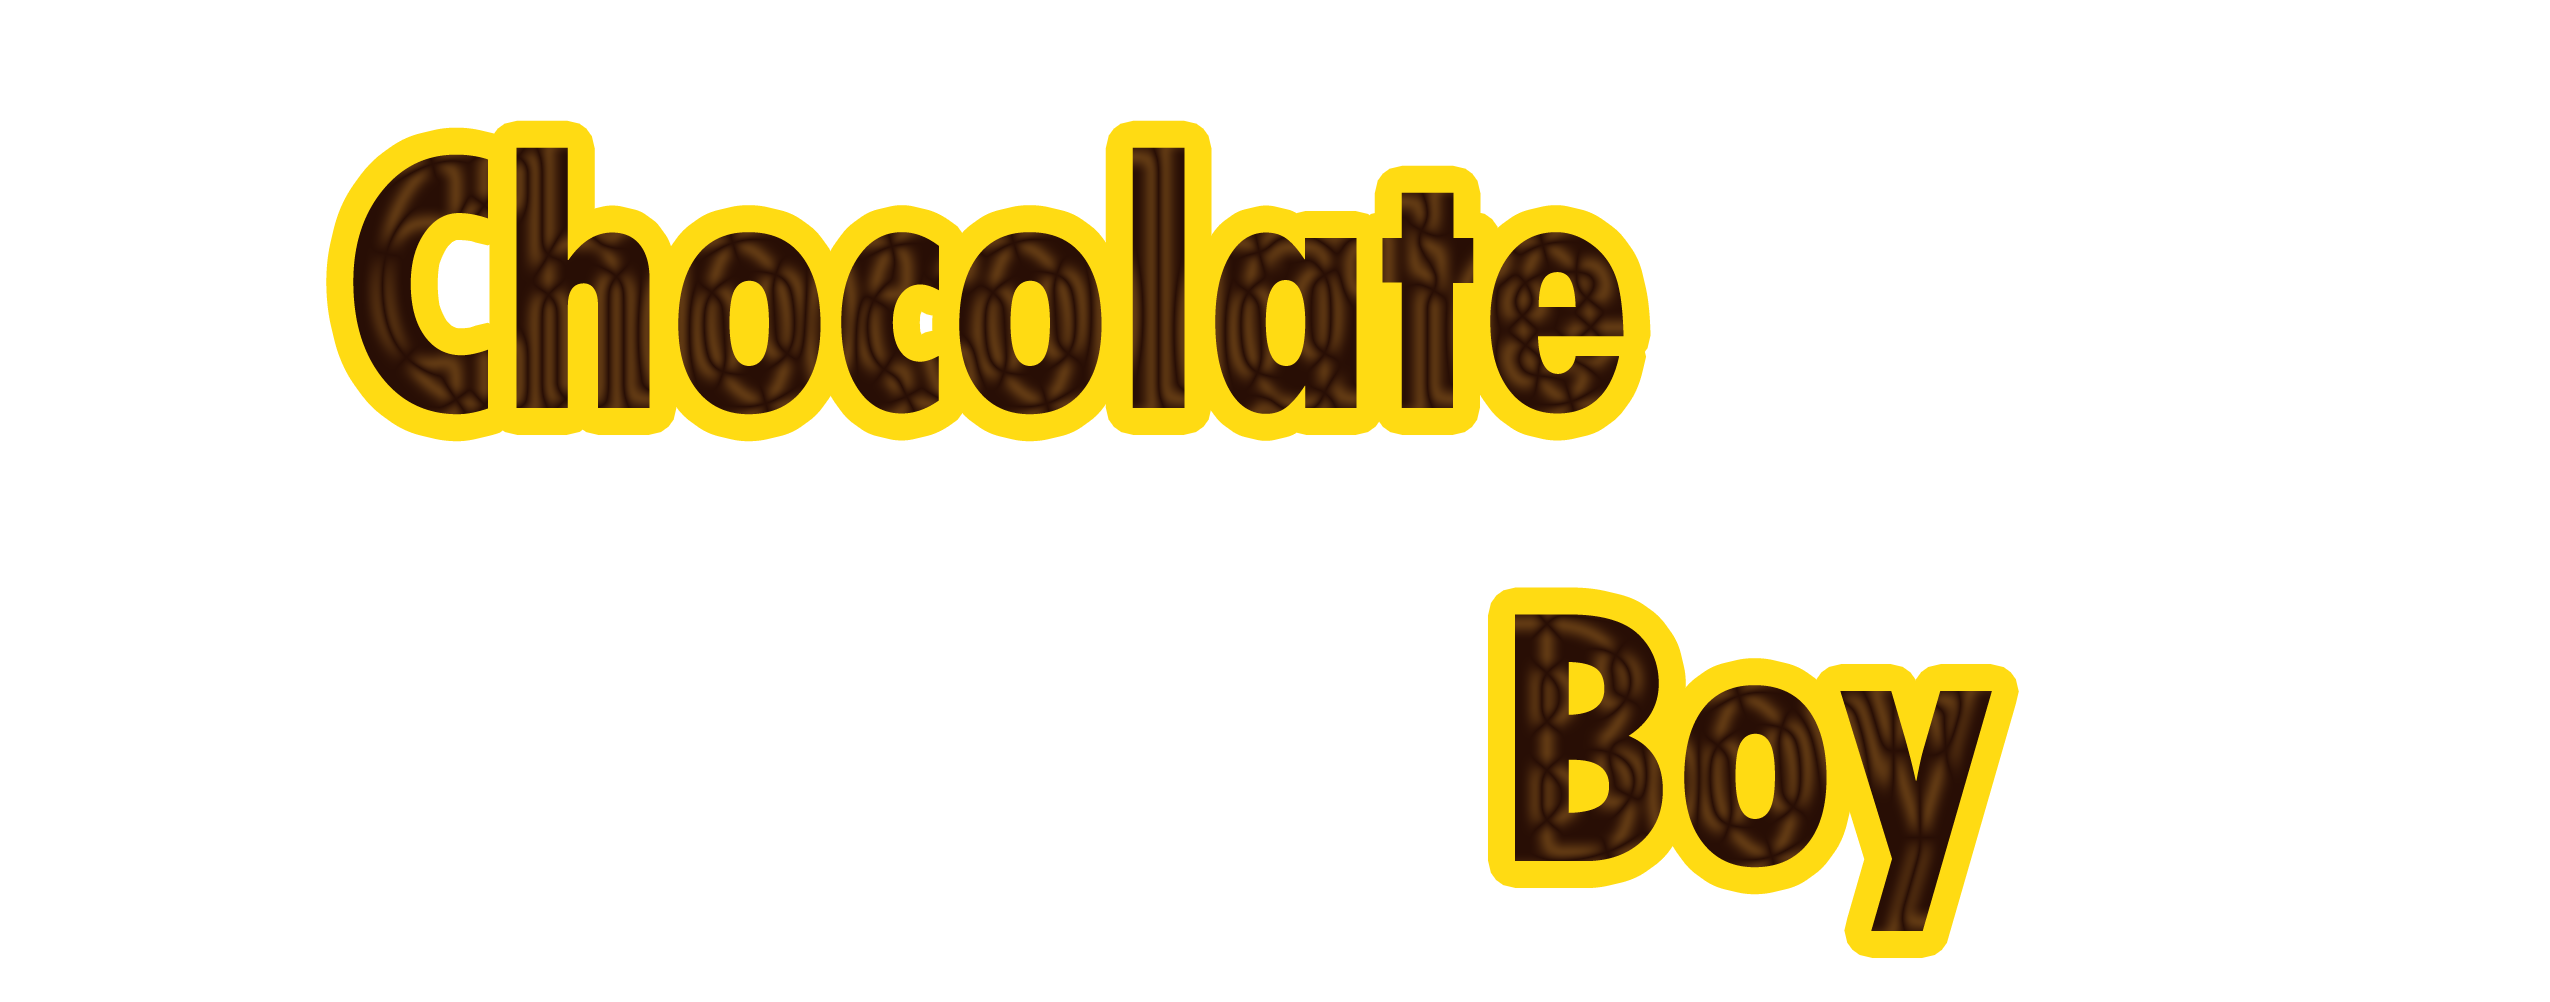 Chocolate Boy #5